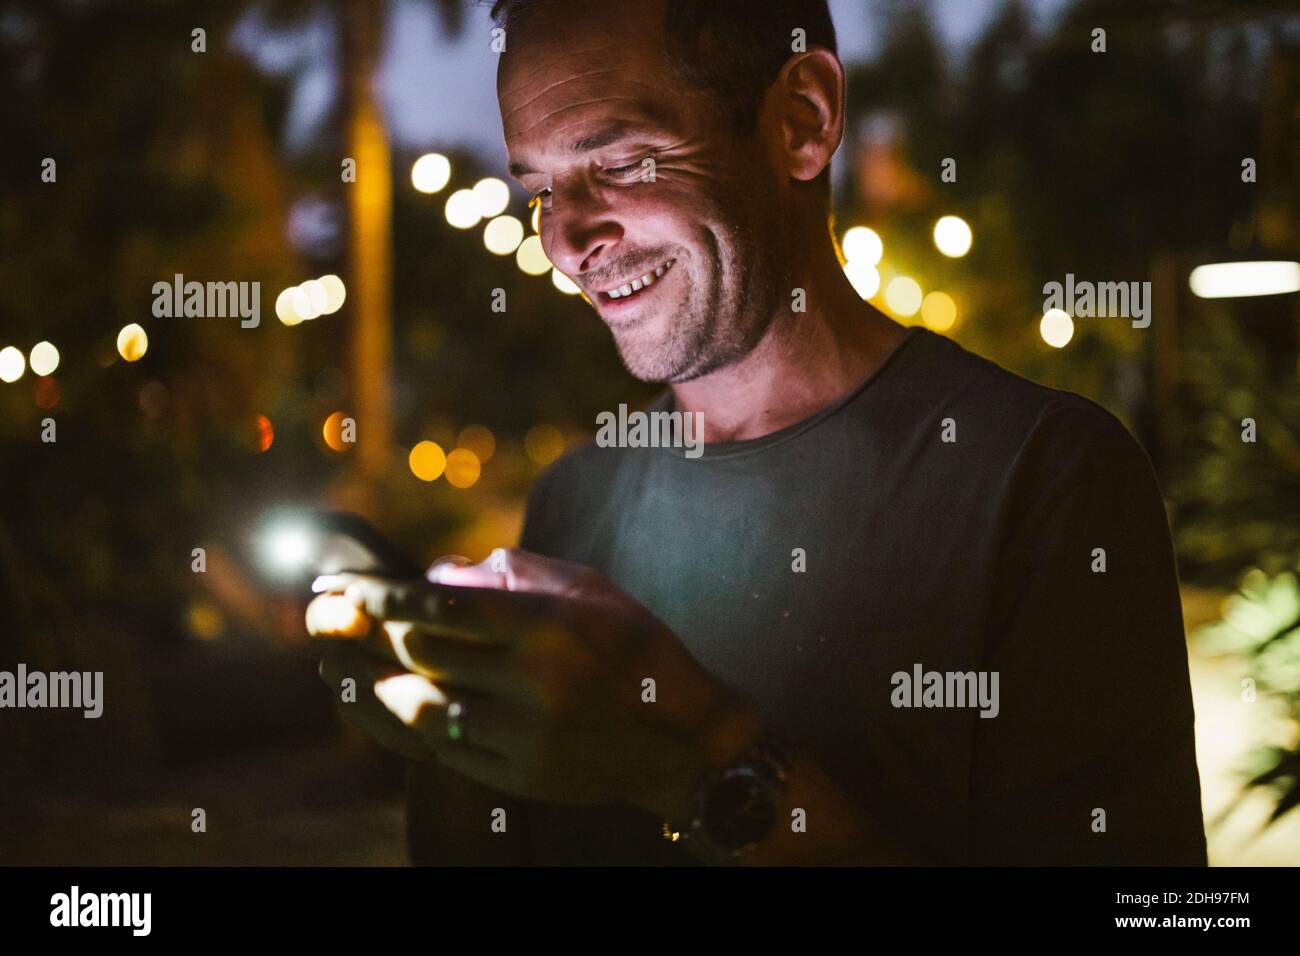 Smiling man texting during sunset Stock Photo